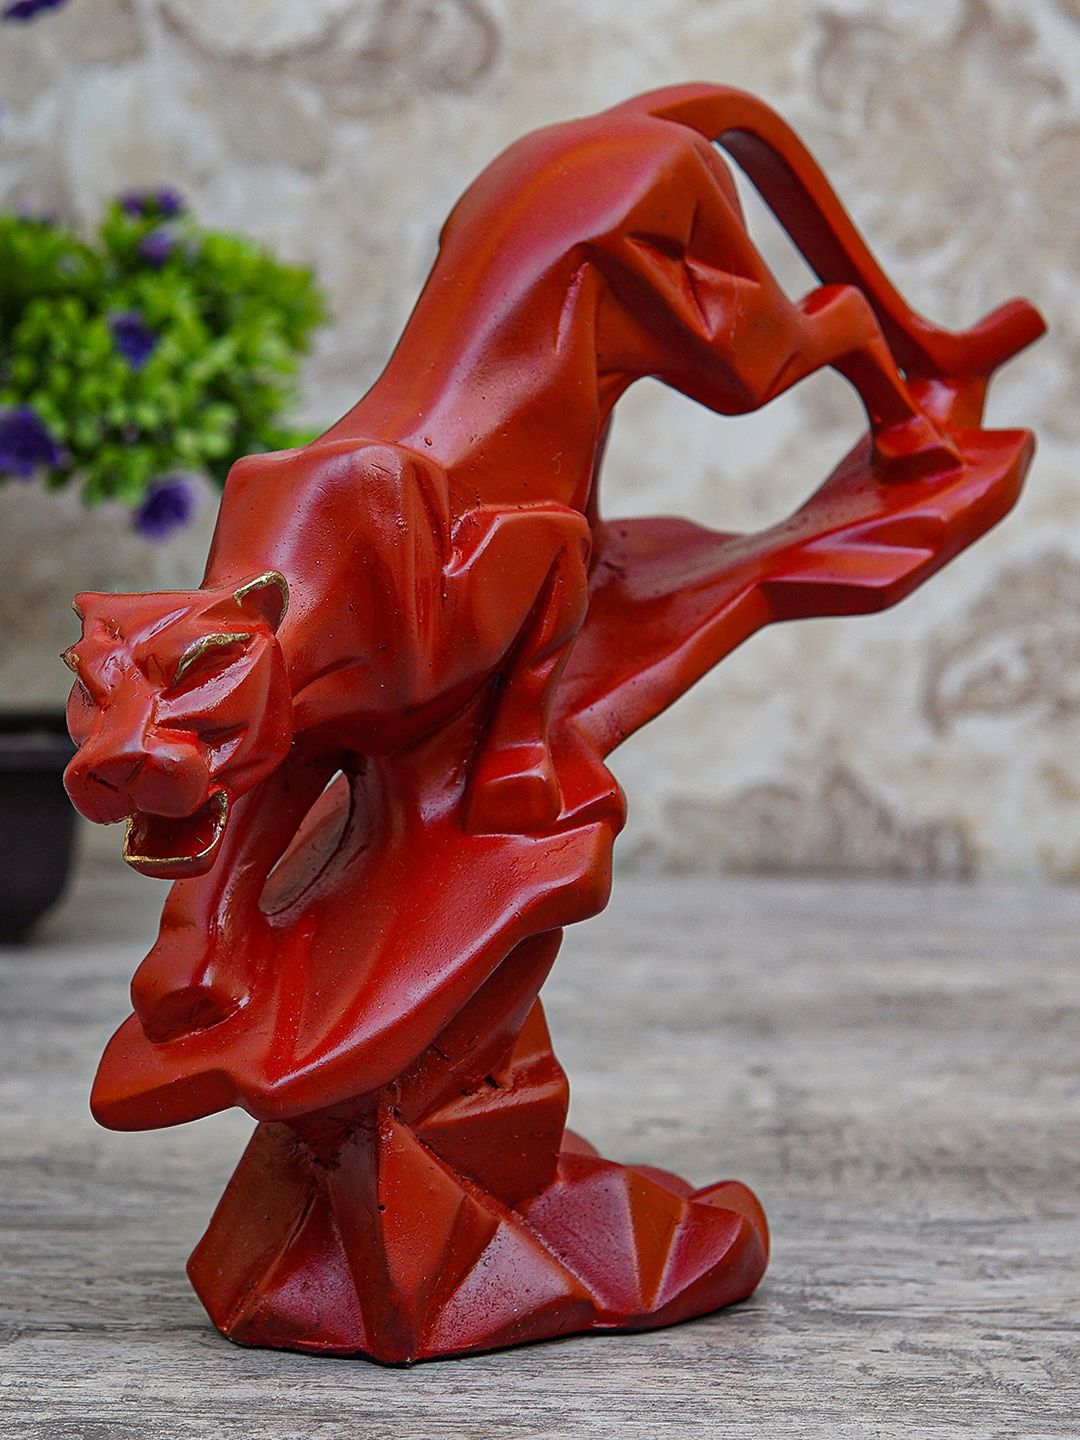 StatueStudio Red Walking Panther Showpiece Price in India